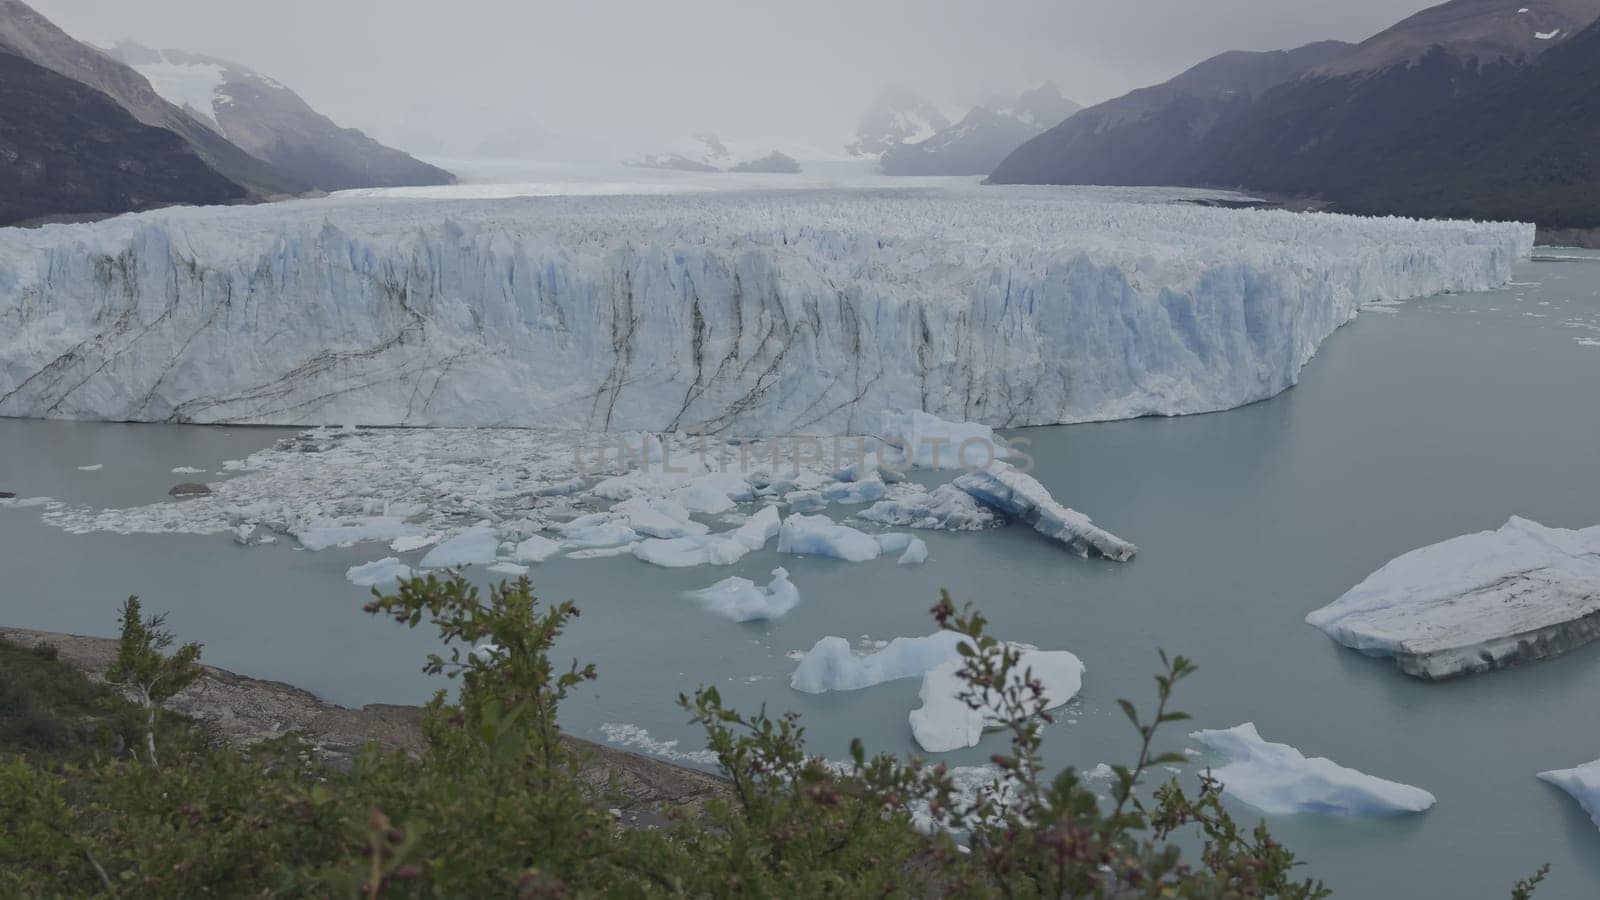 Perito Moreno Glacier Calving with Gentle Tree Branch Movement by FerradalFCG